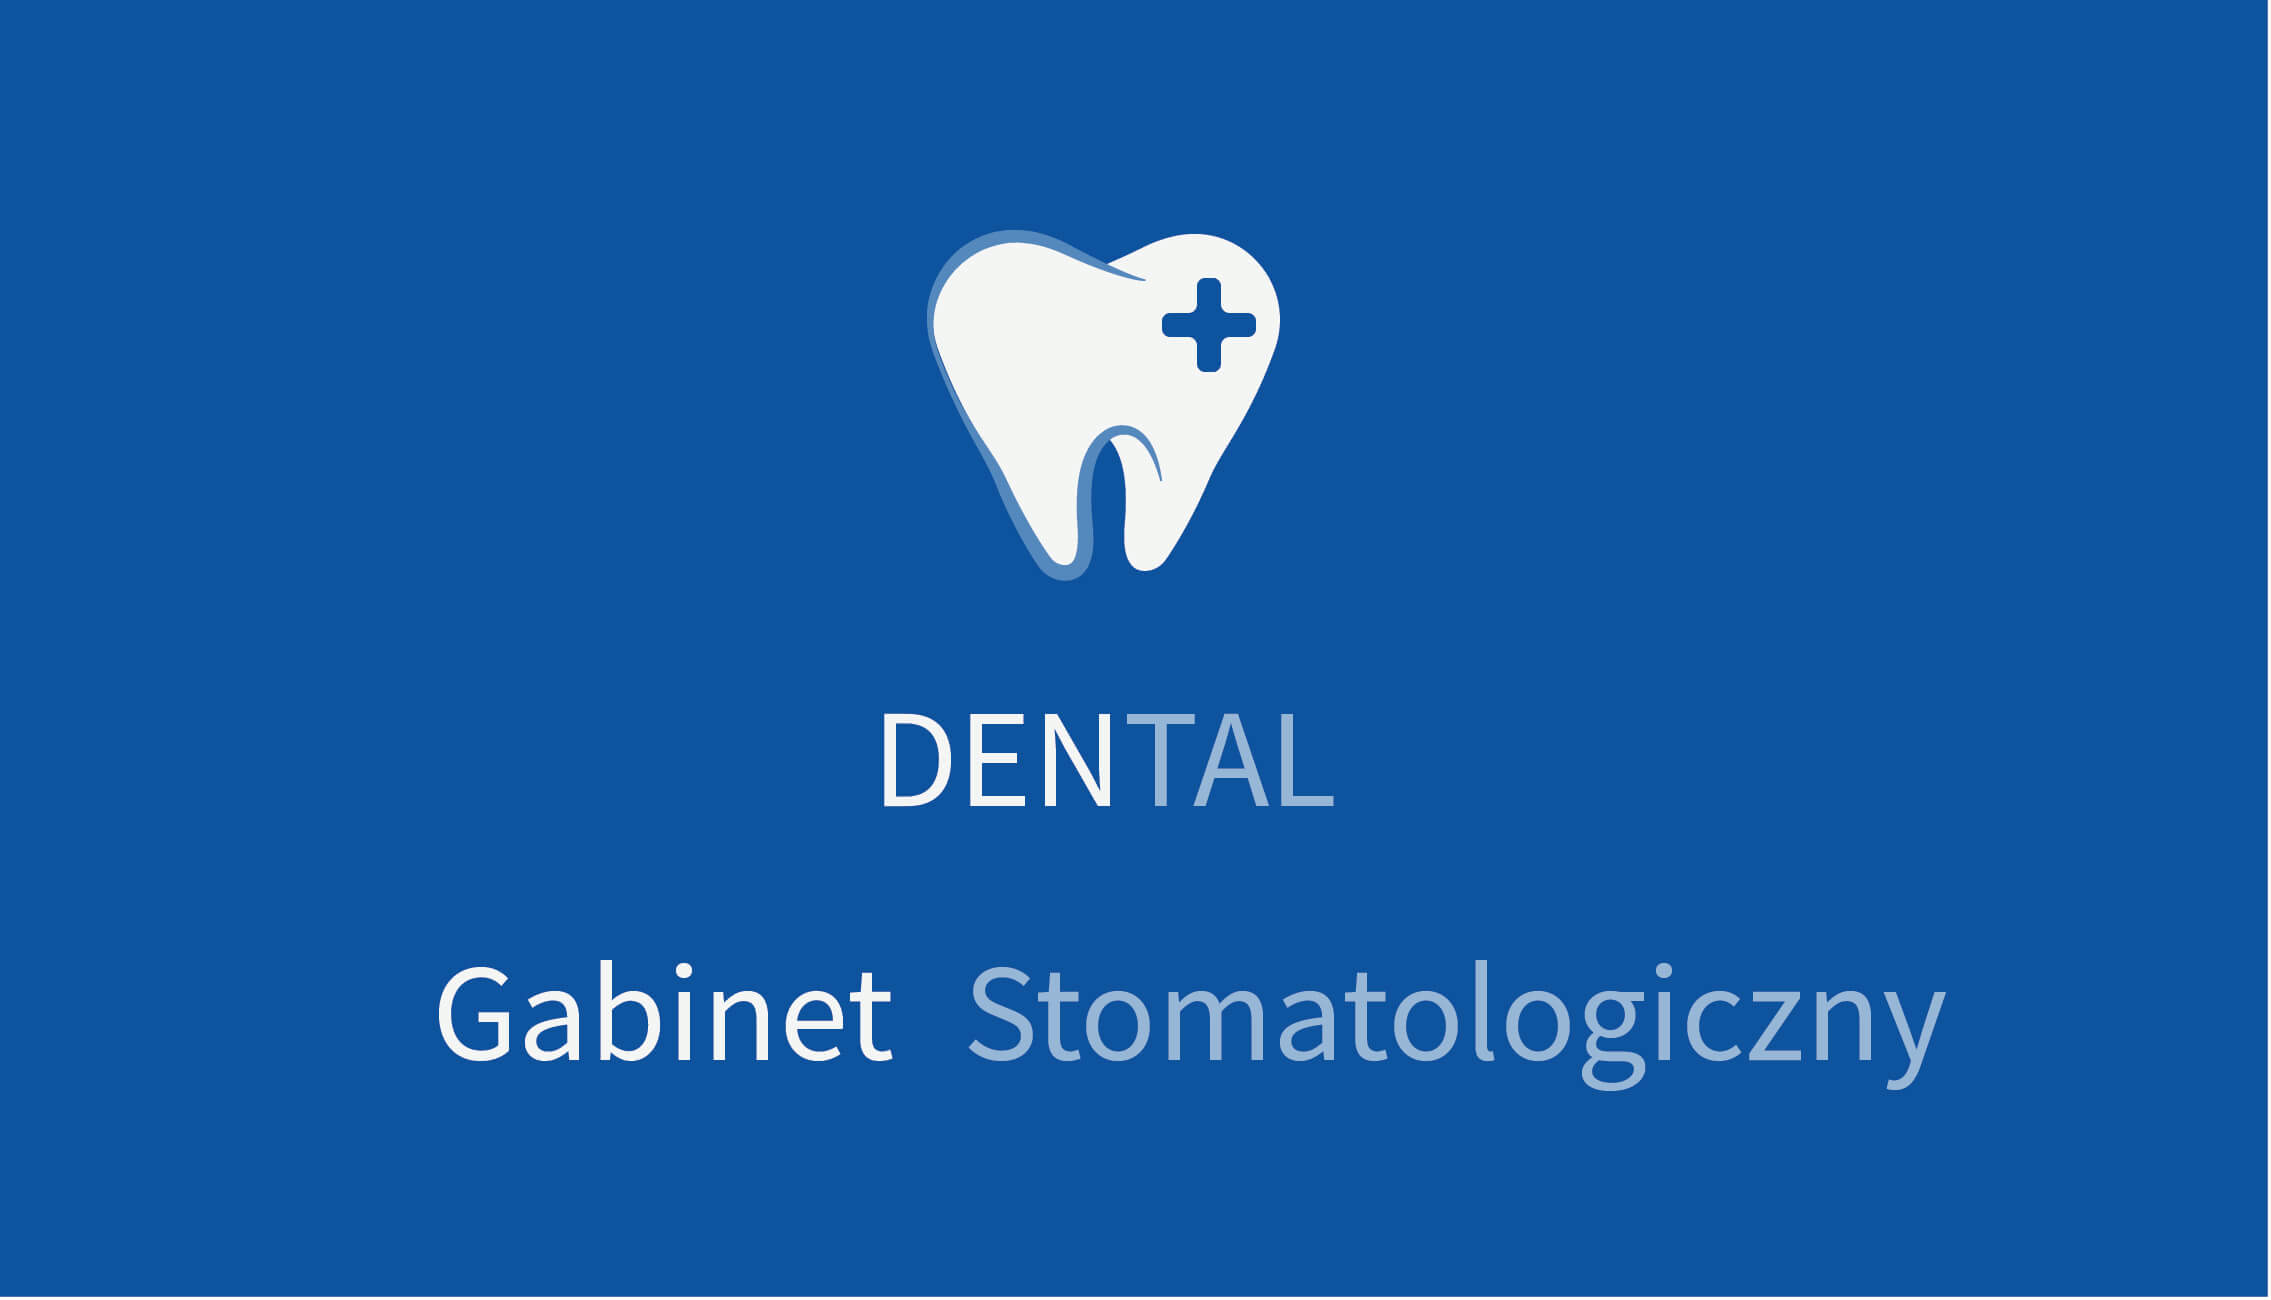 Gabinet Stomatologiczny Dental